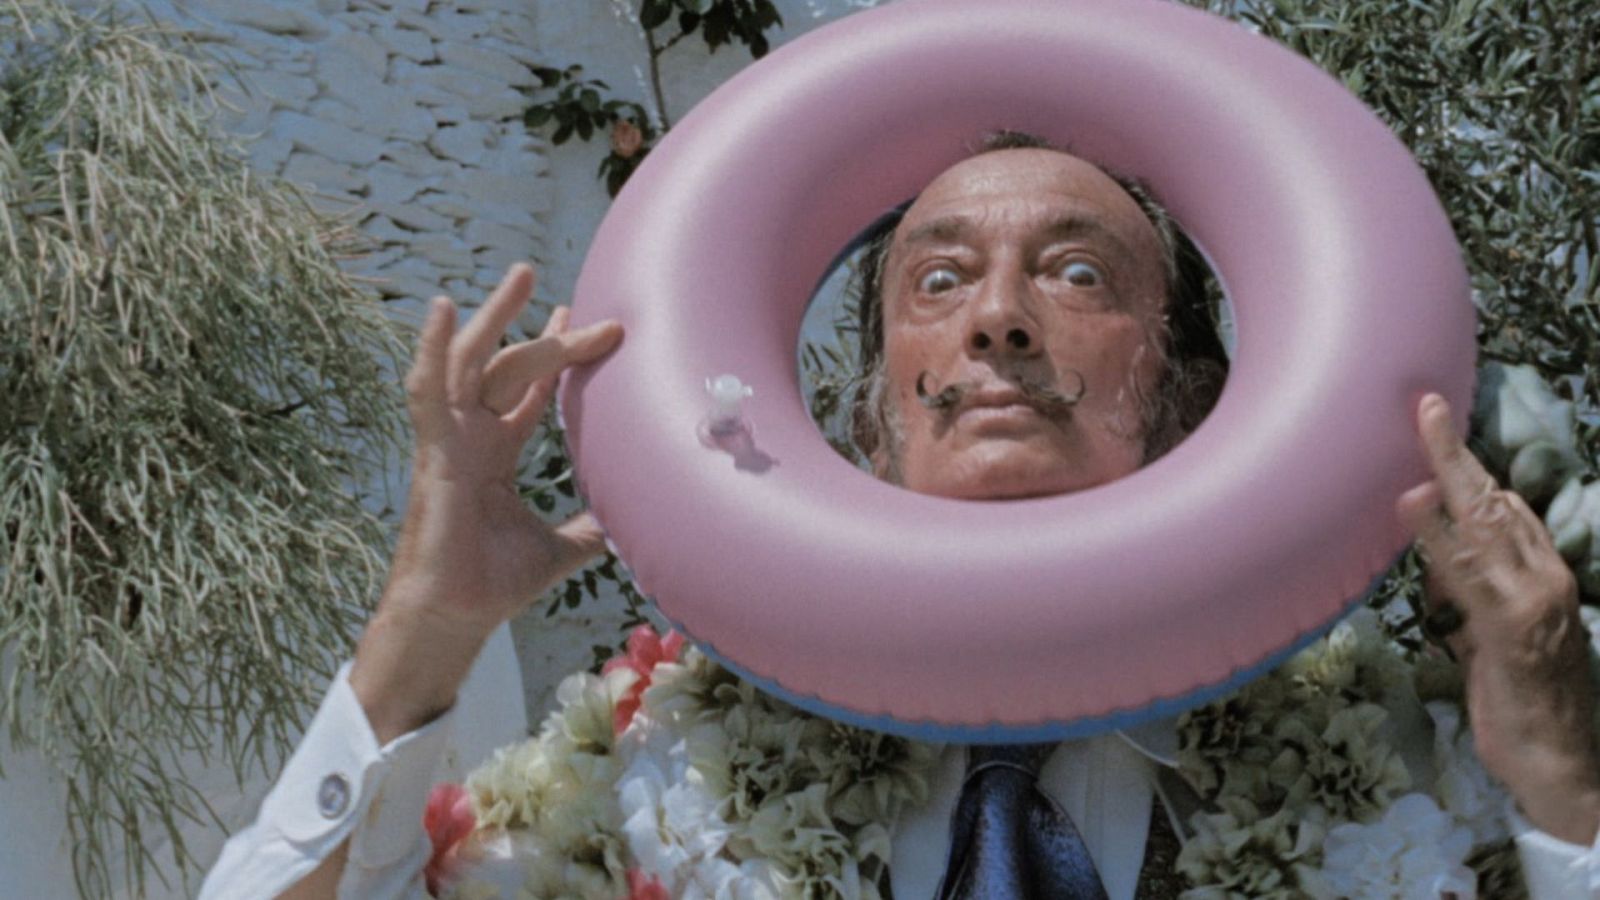 Salvador Dalí. Divino Dalí